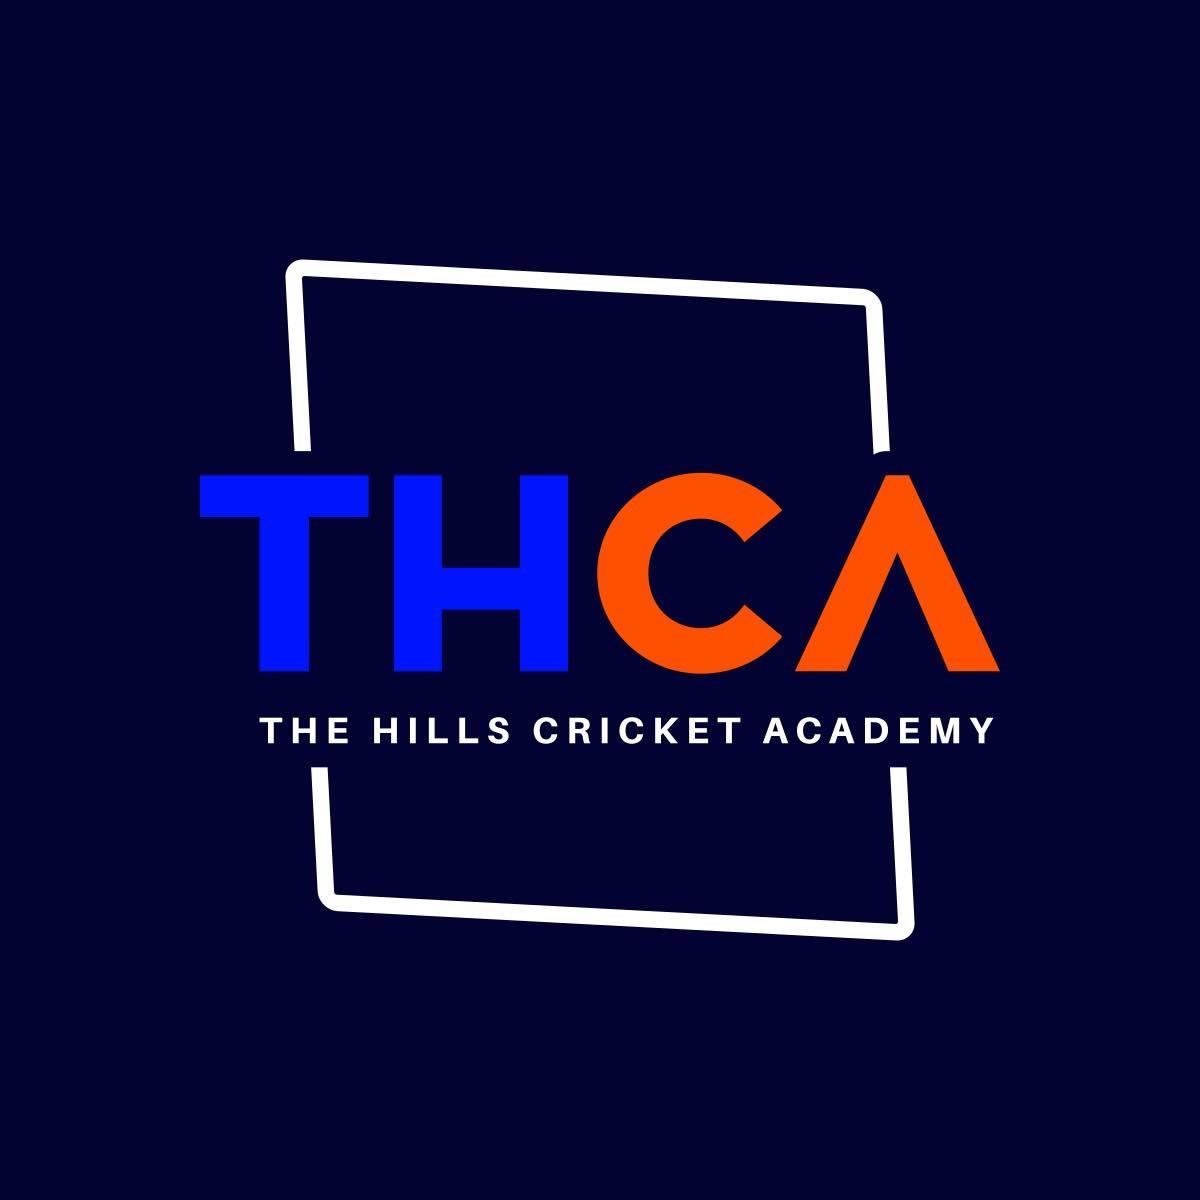 The Hills Cricket Academy